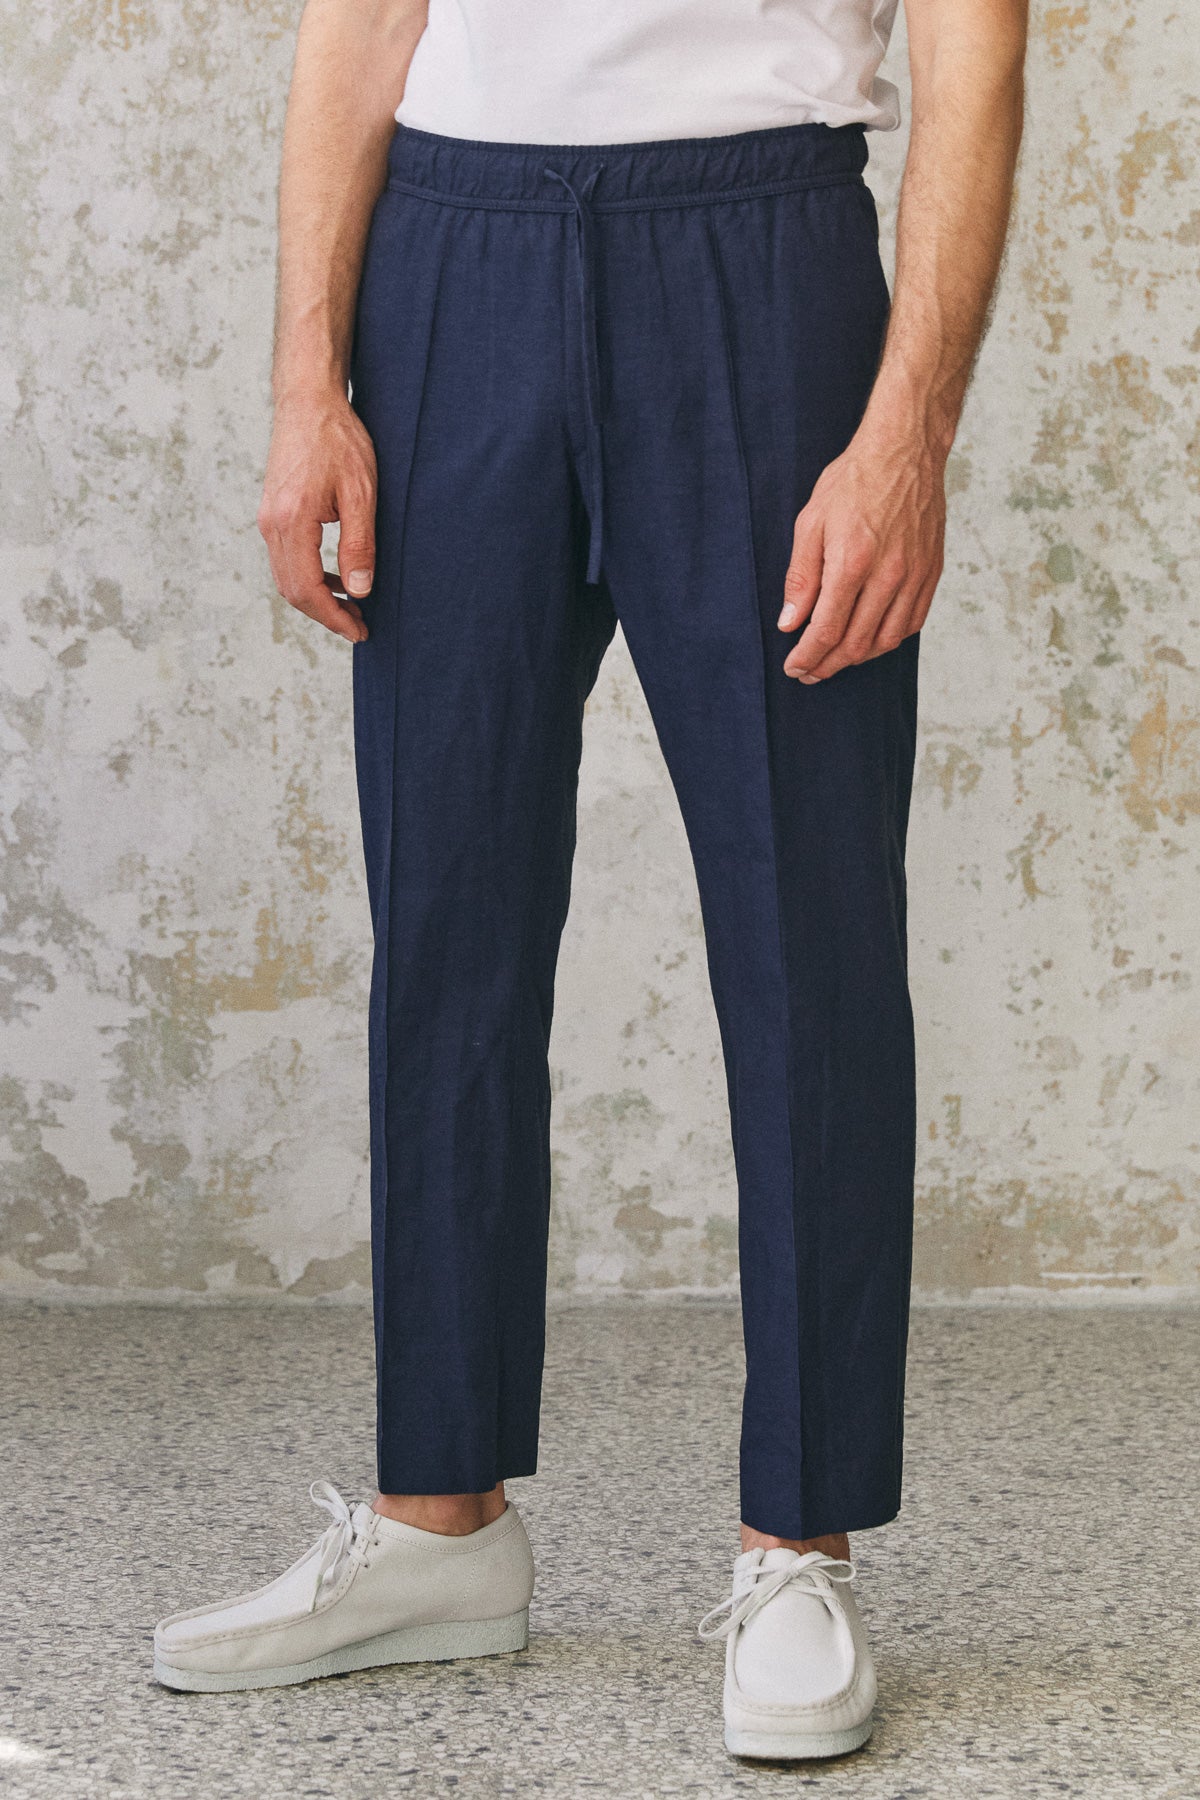 Nike Air Max Men's Woven Cargo Weaving Joggers Pants Trousers DV2336 073 XL  $110 | eBay